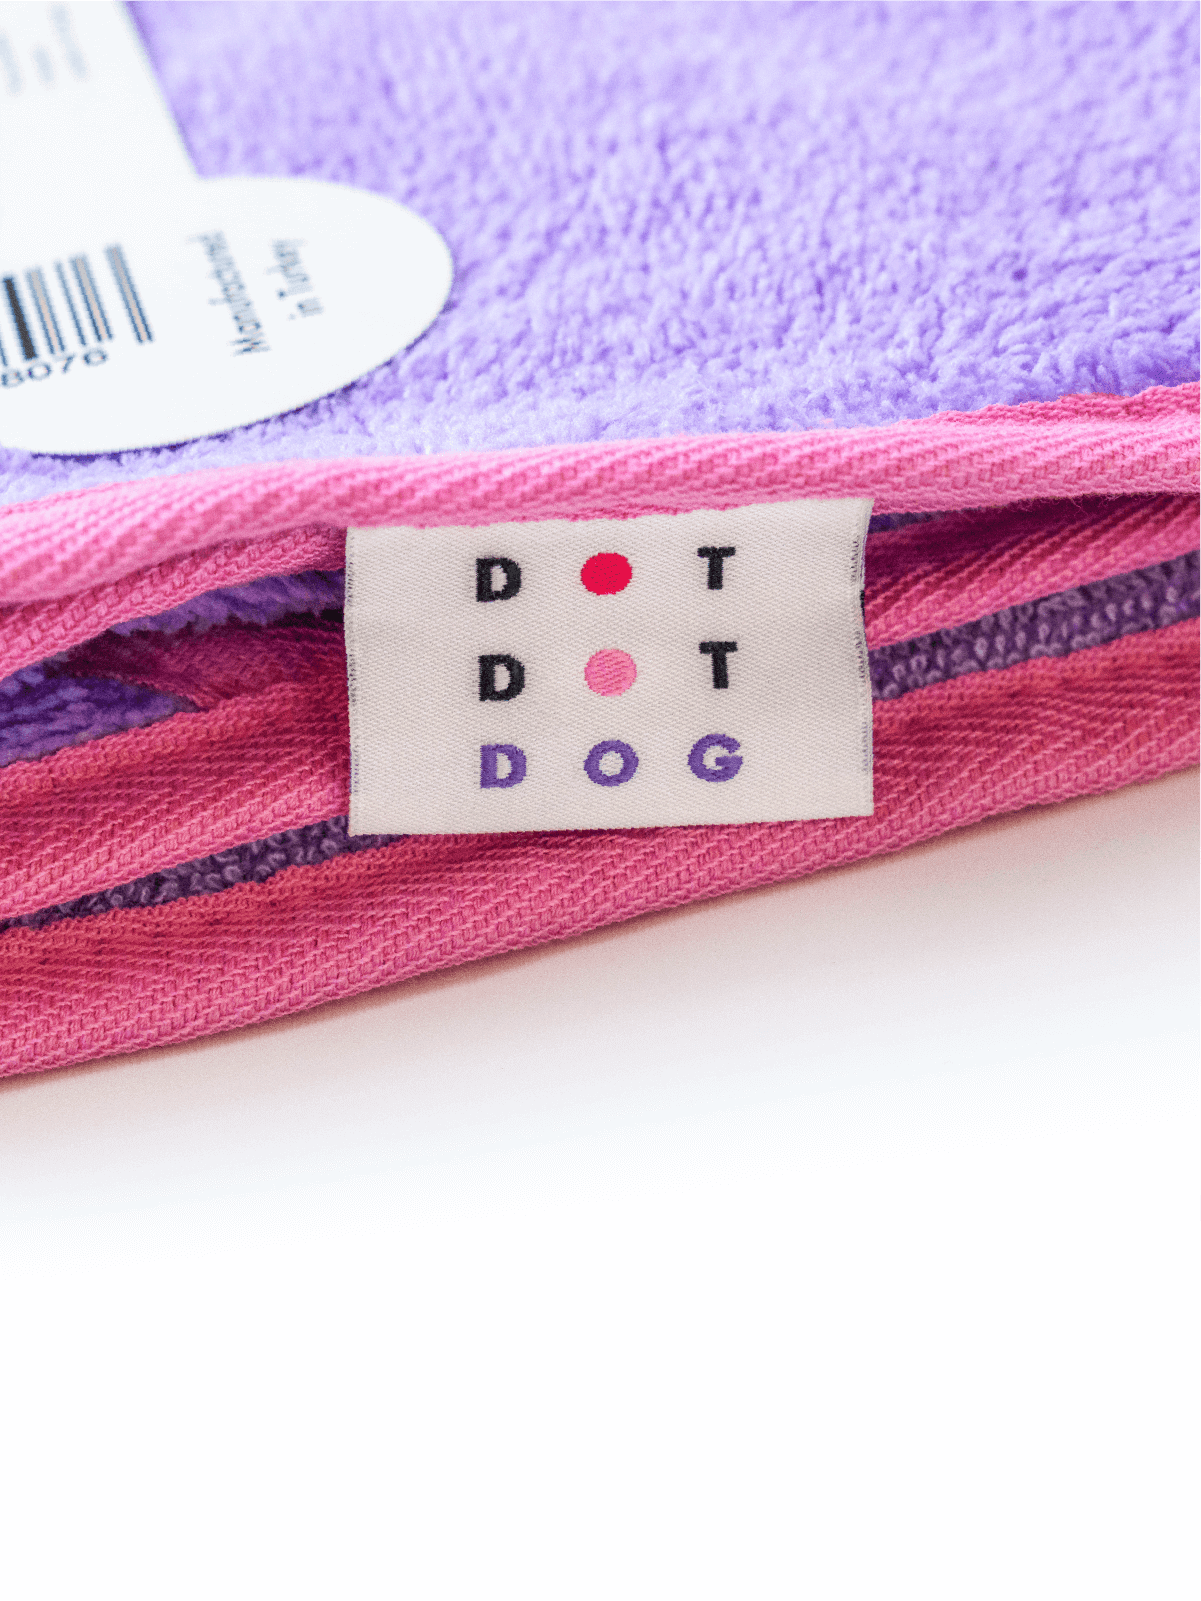 Image of the dog towel wash label 